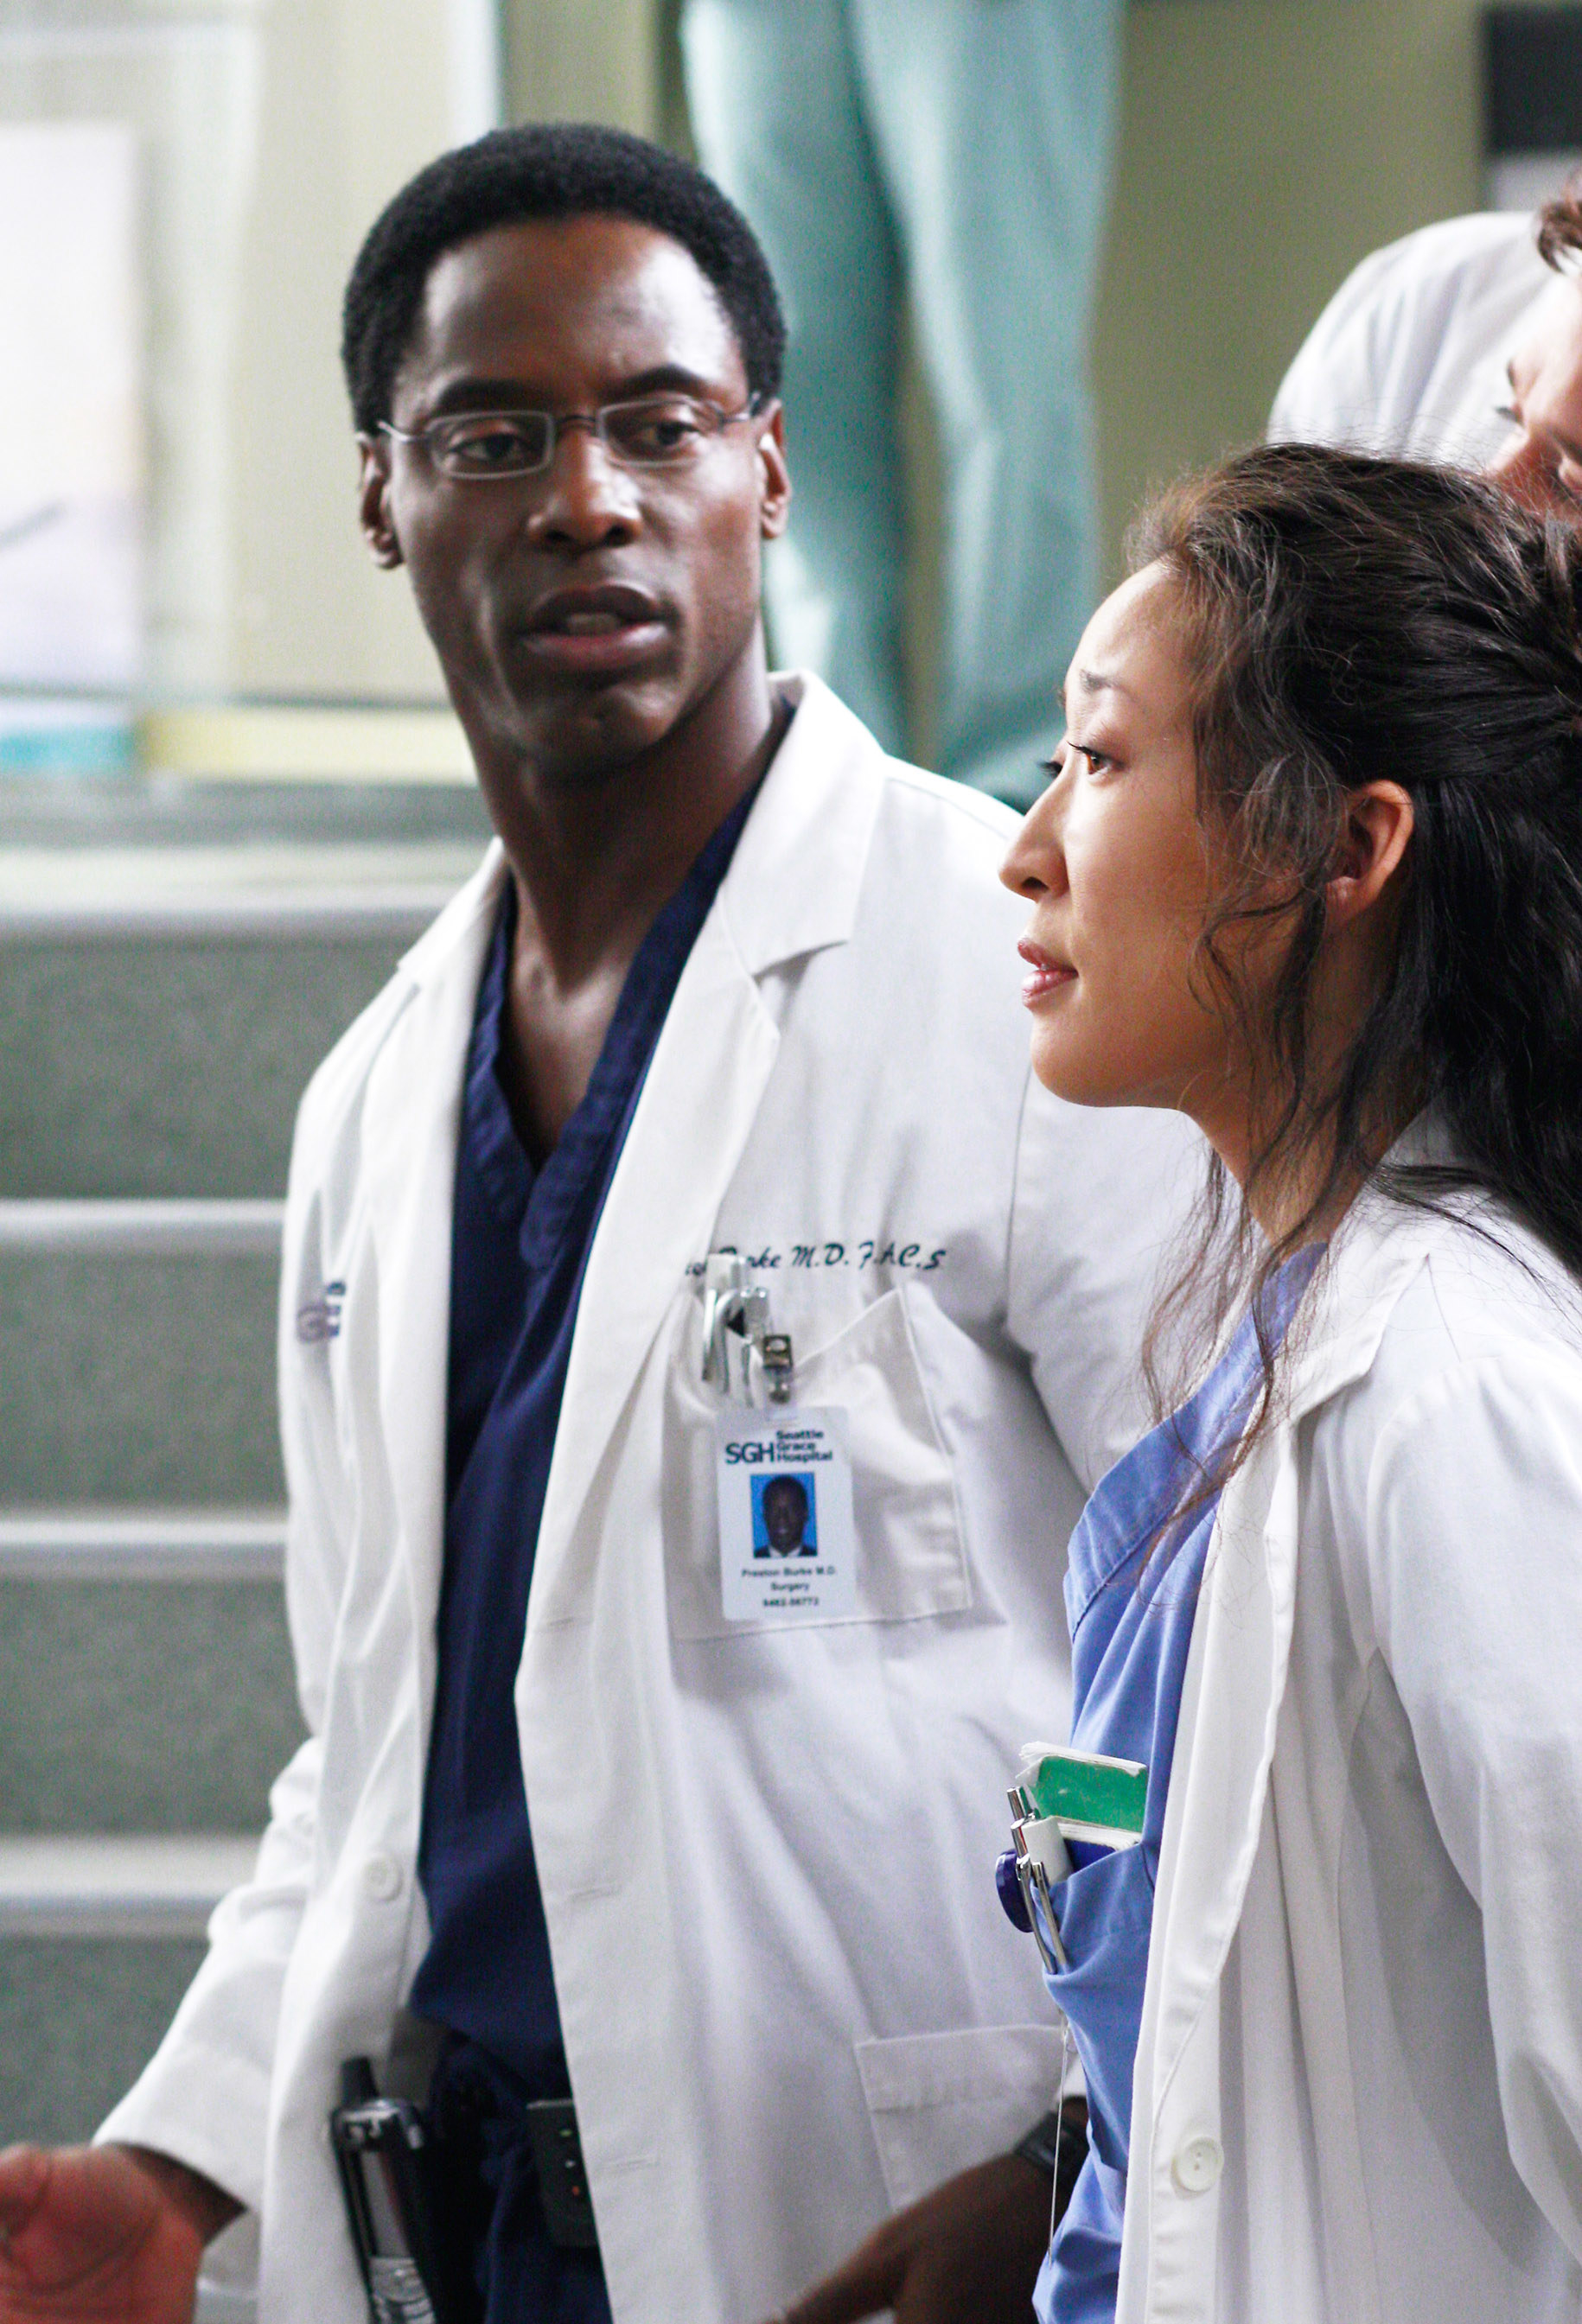 Isaiah Washington and Sandra Oh on set of "Grey's Anatomy"